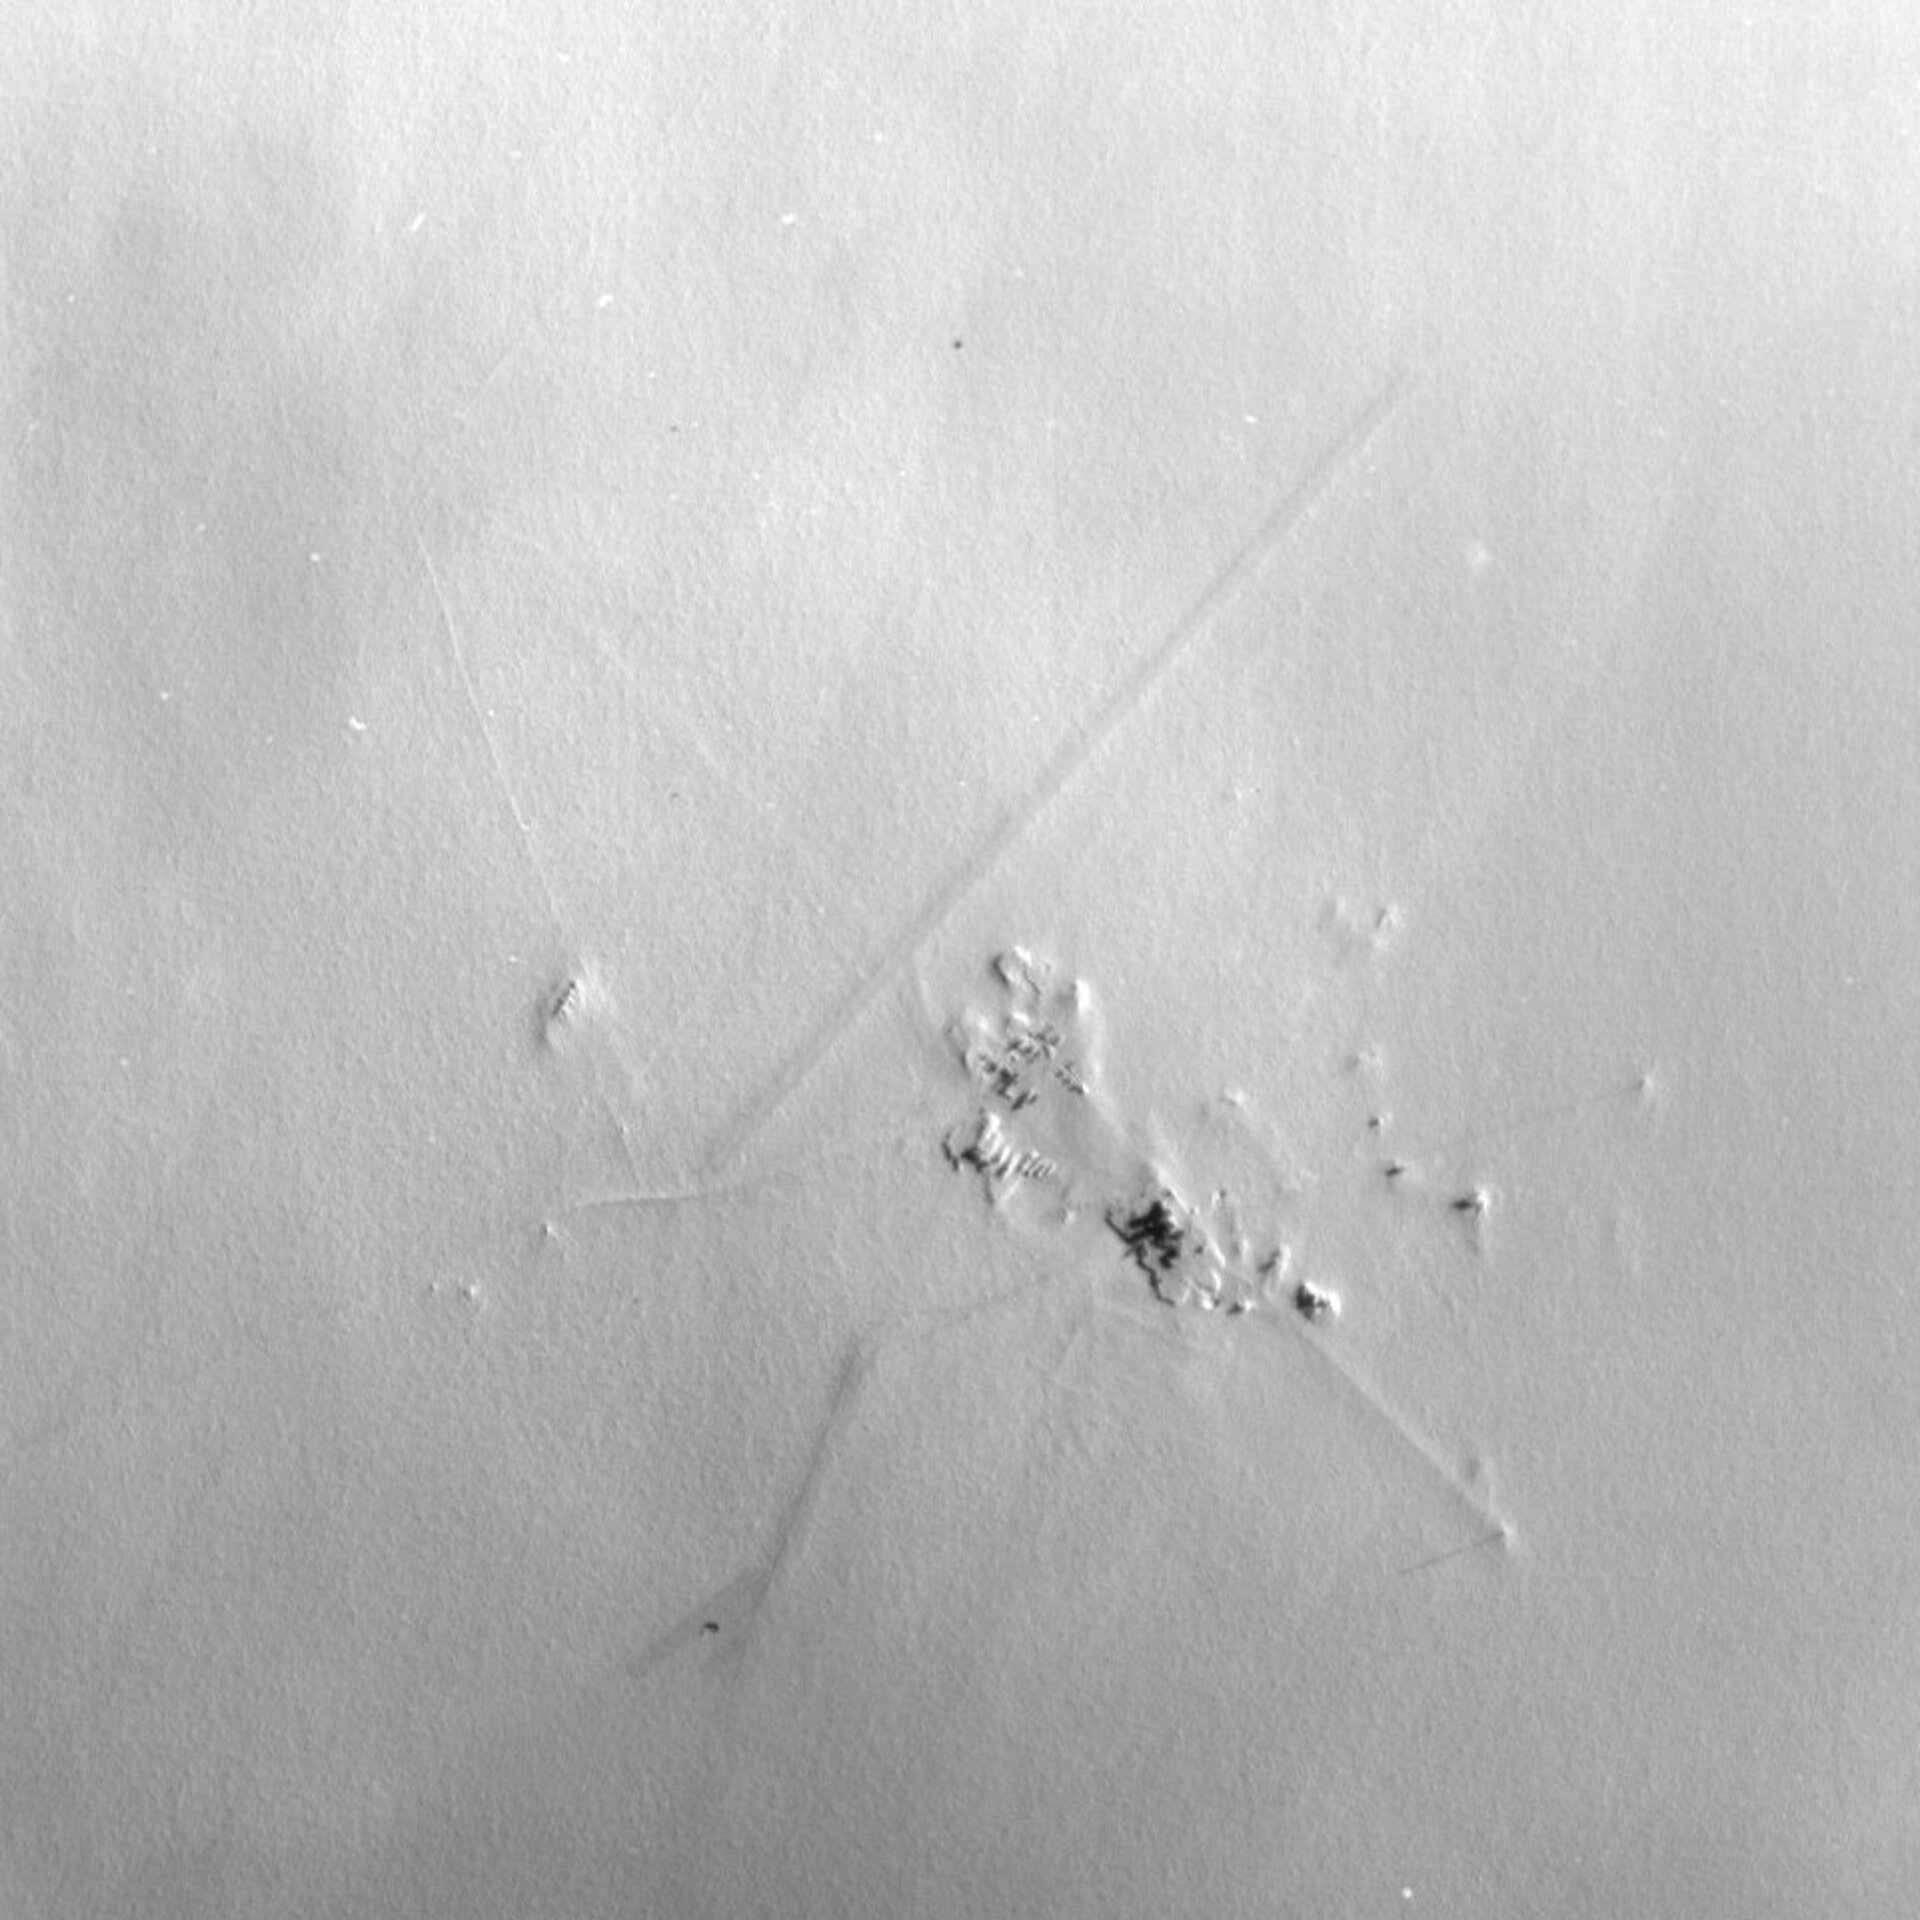 Proba-1 images Concordia base